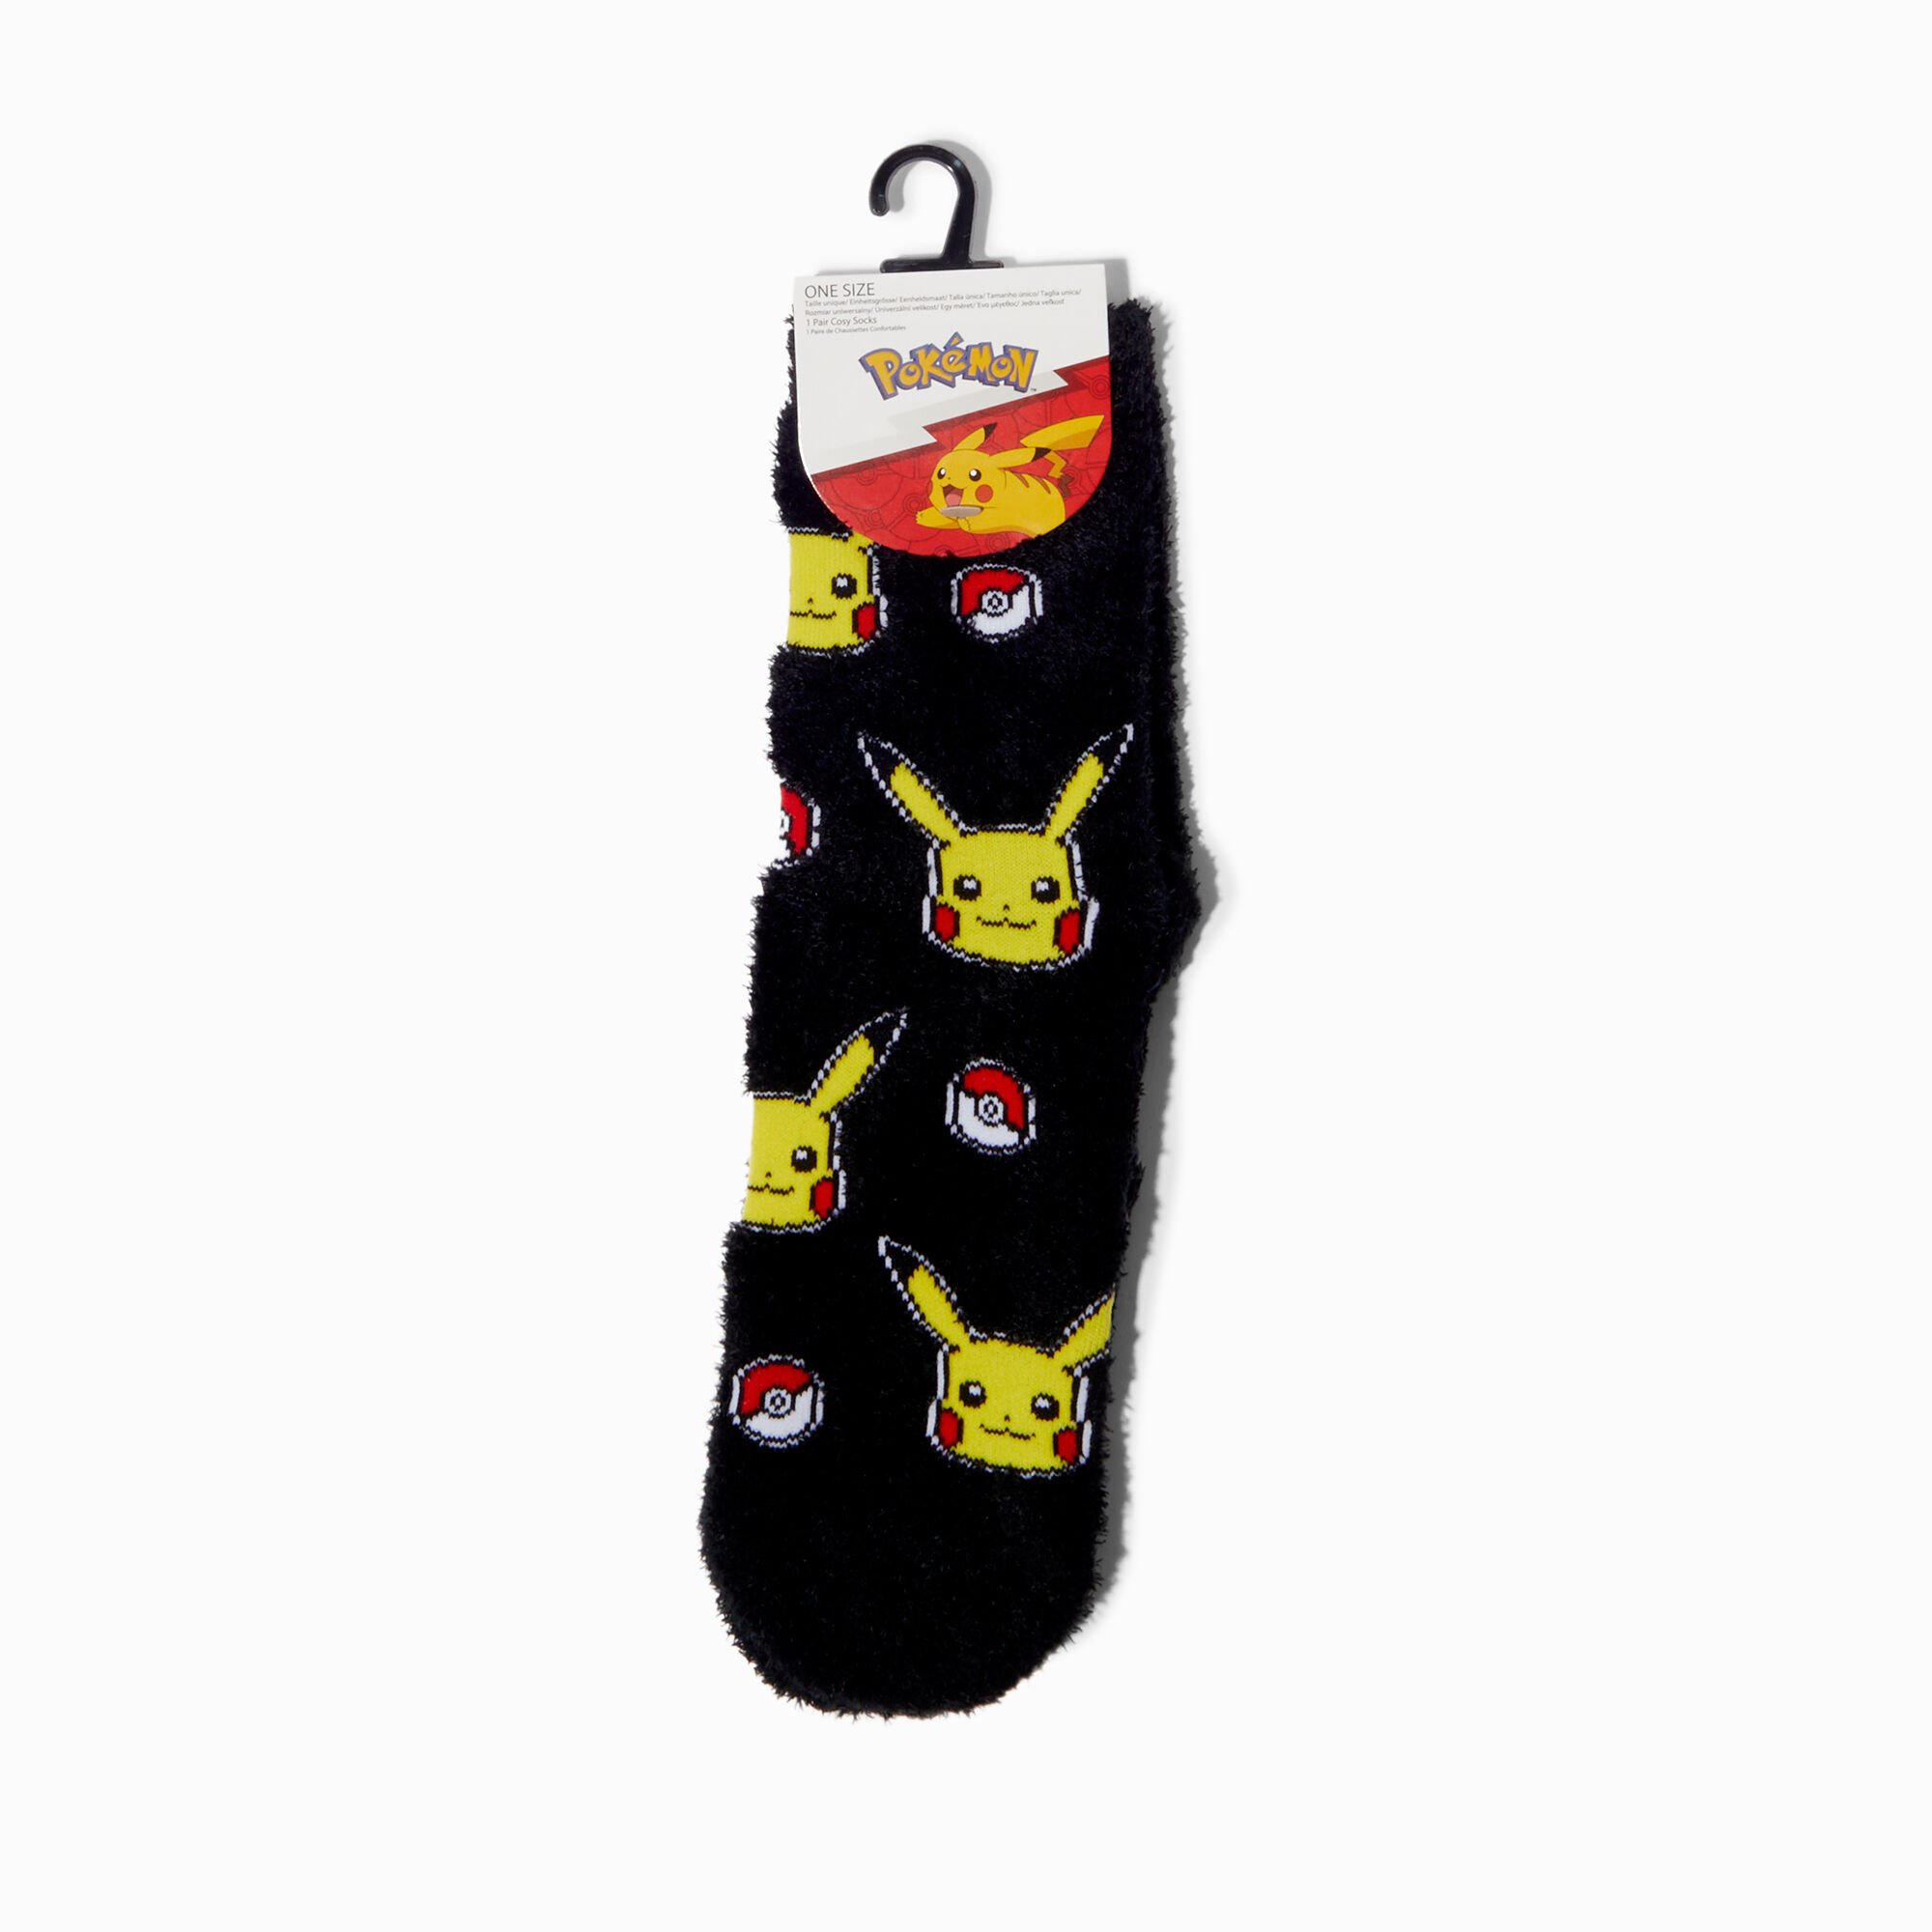 View Claires Pokémon Pikachu Cozy Socks 1 Pair information